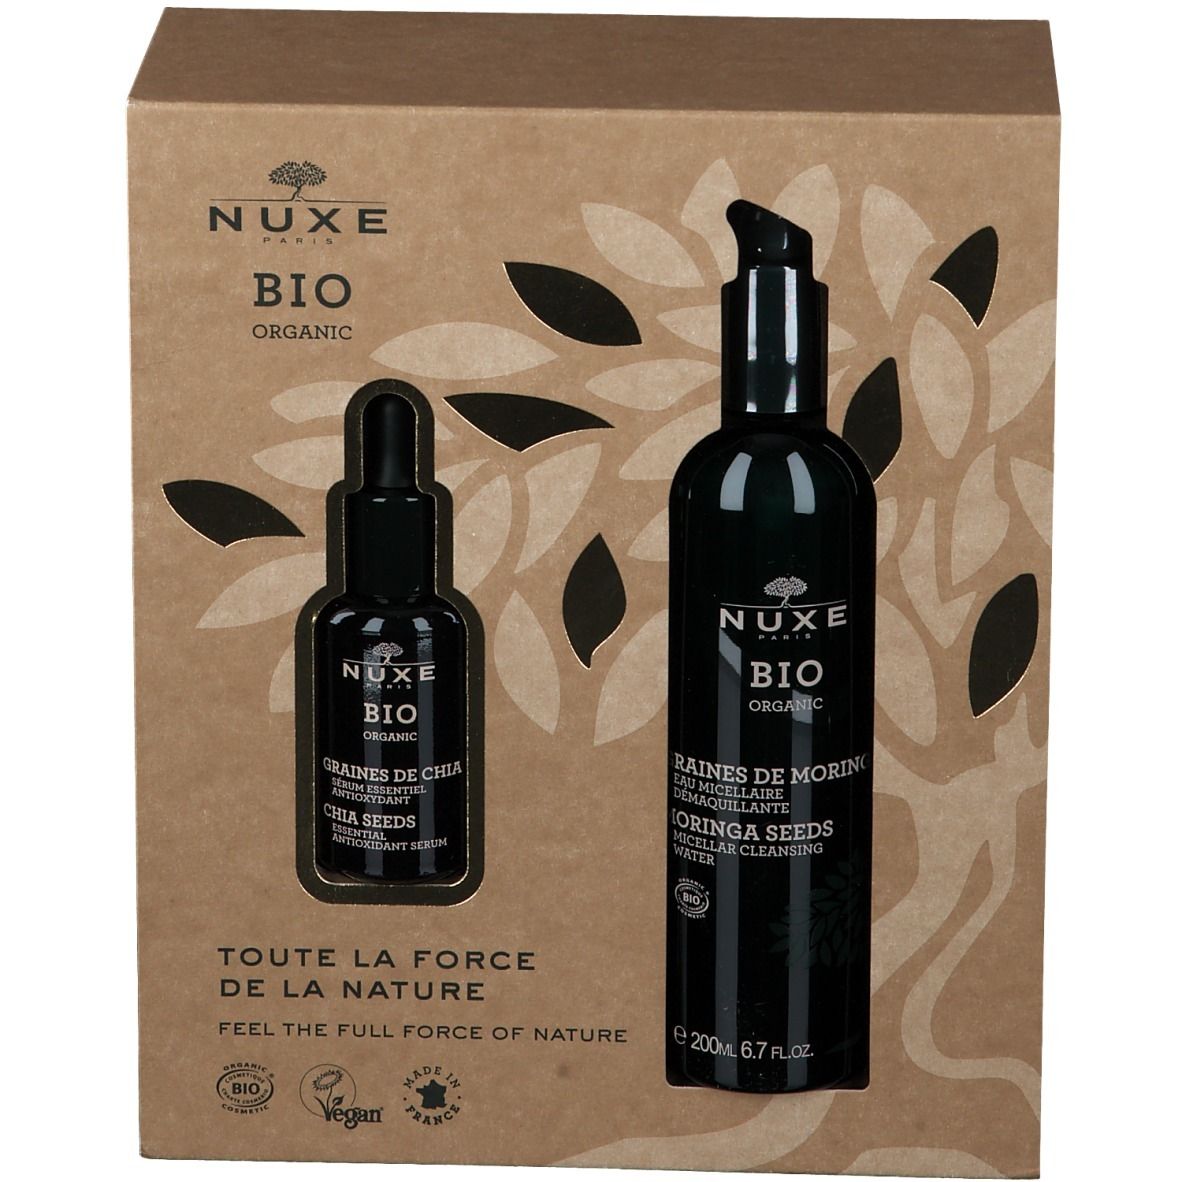 Nuxe Bio Organic Gift Set